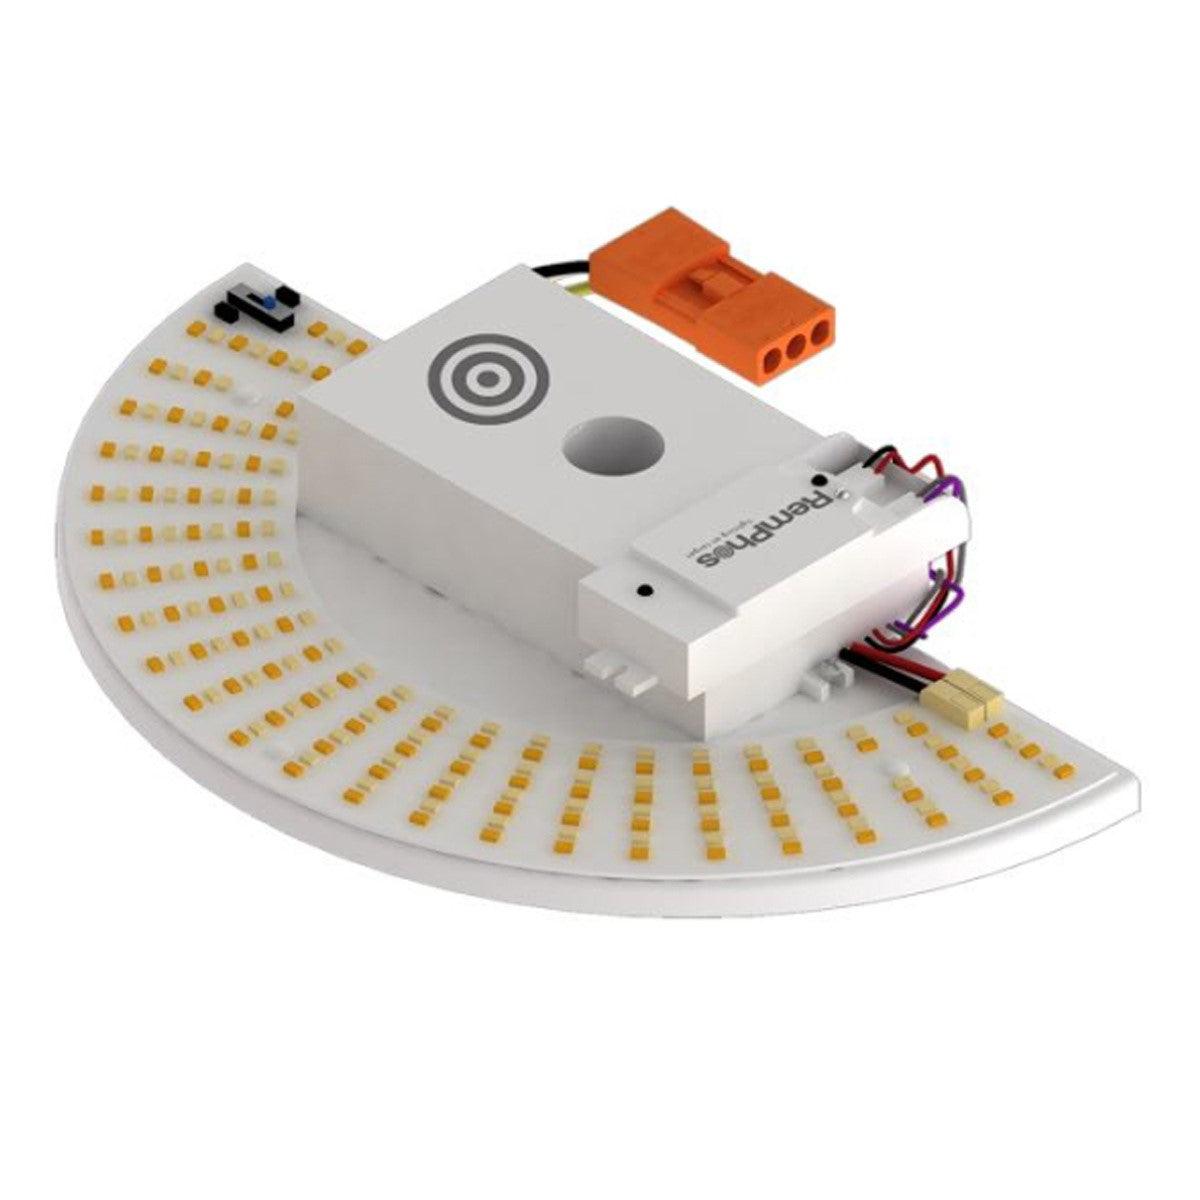 RemPhos Sconce, 9 in LED Retrofit Kit, 15 Watt, 816 Lumens, Selectable CCT 30K/35K/40K, Motion Sensor